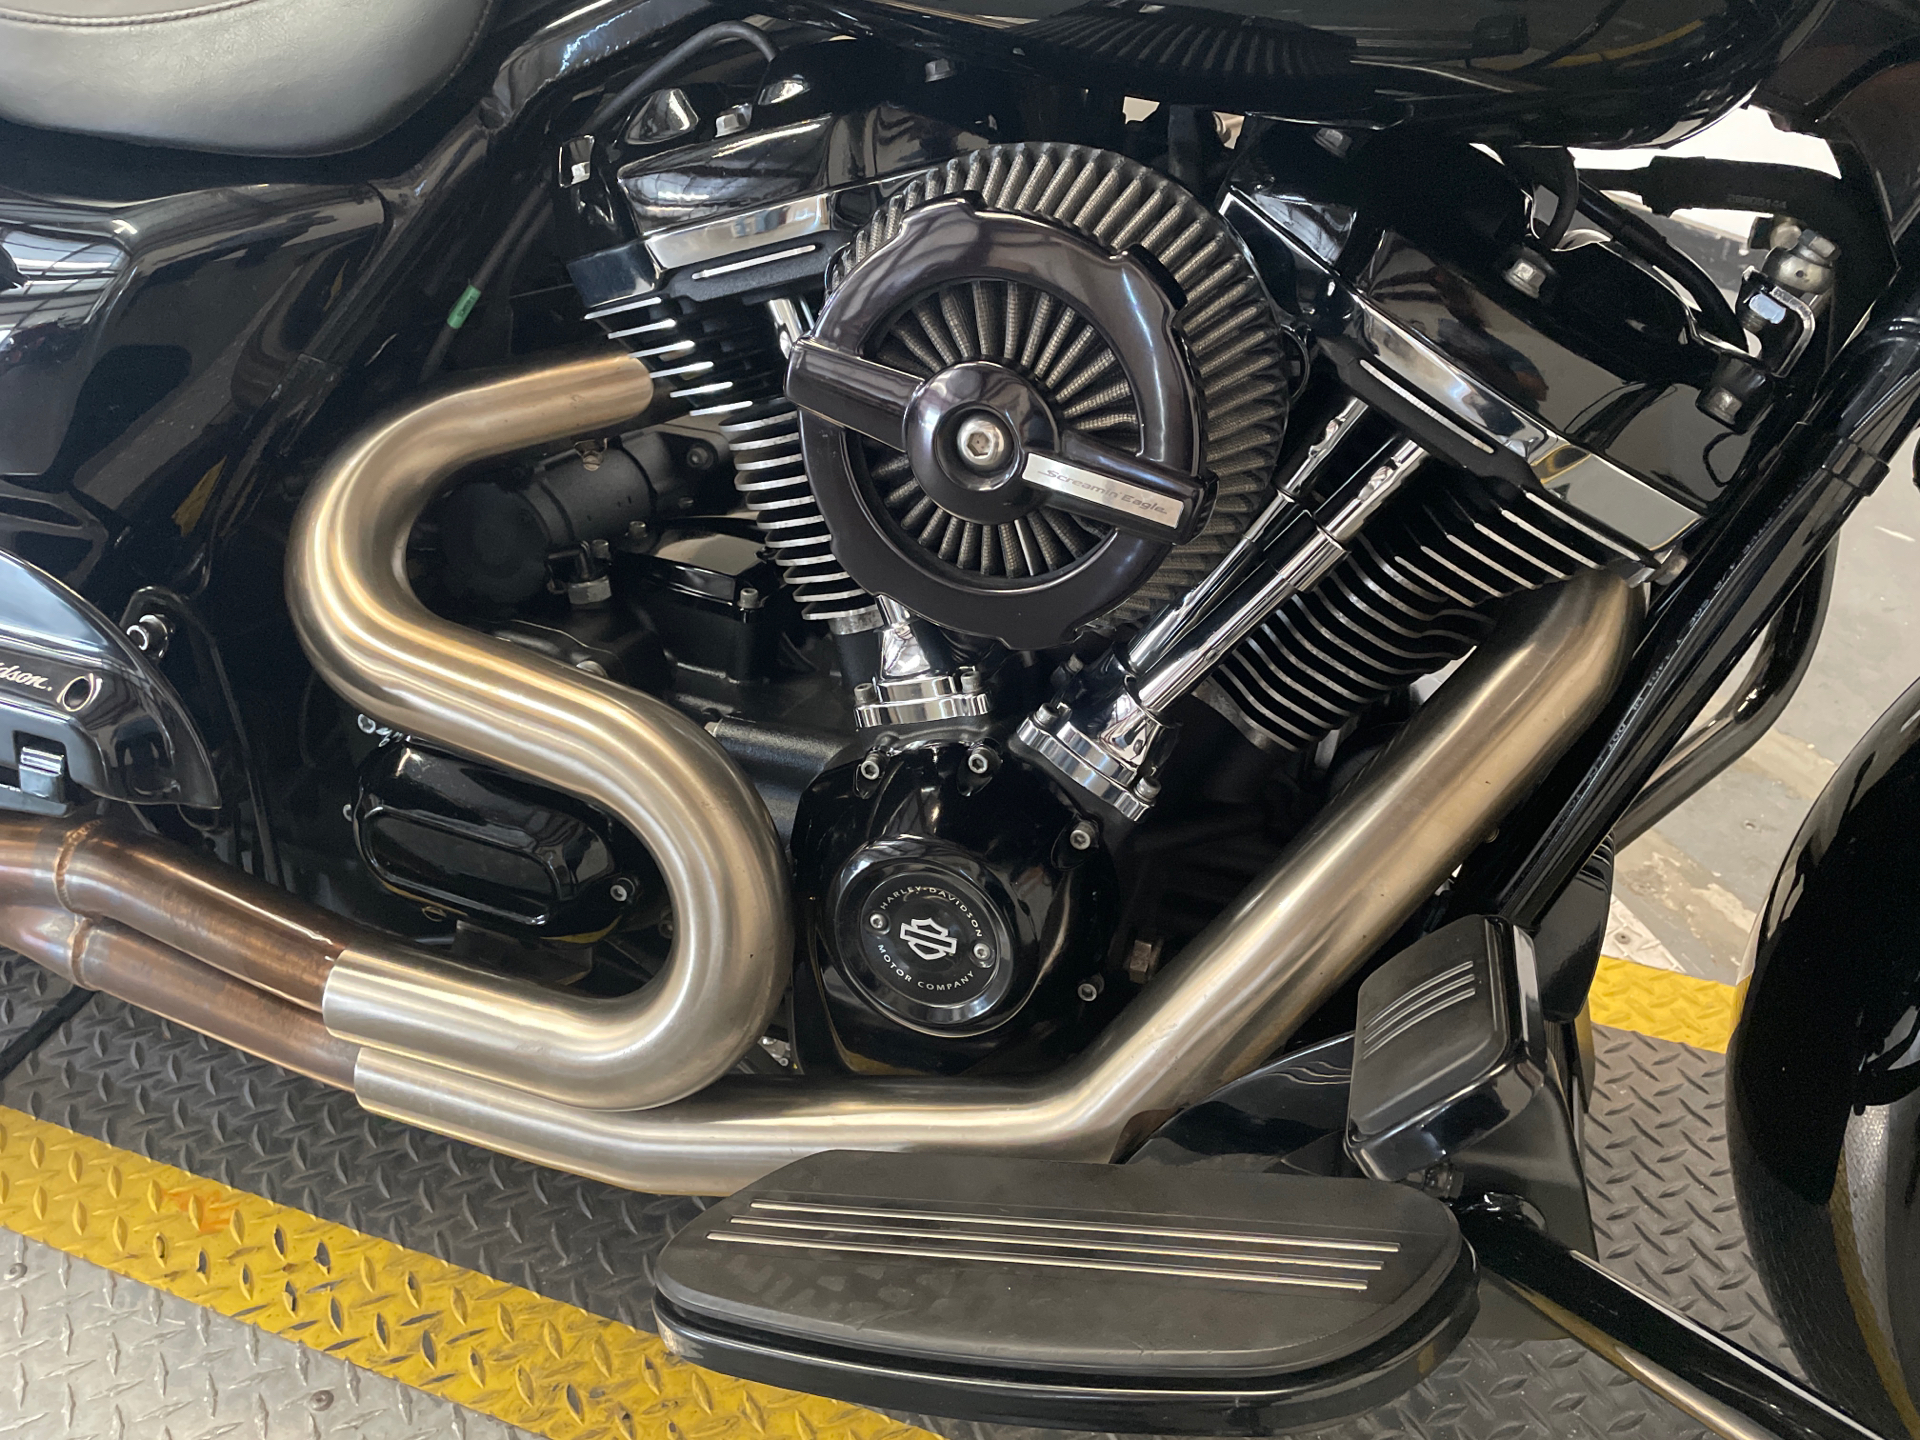 2018 Harley-Davidson Road Glide used - Photo 9